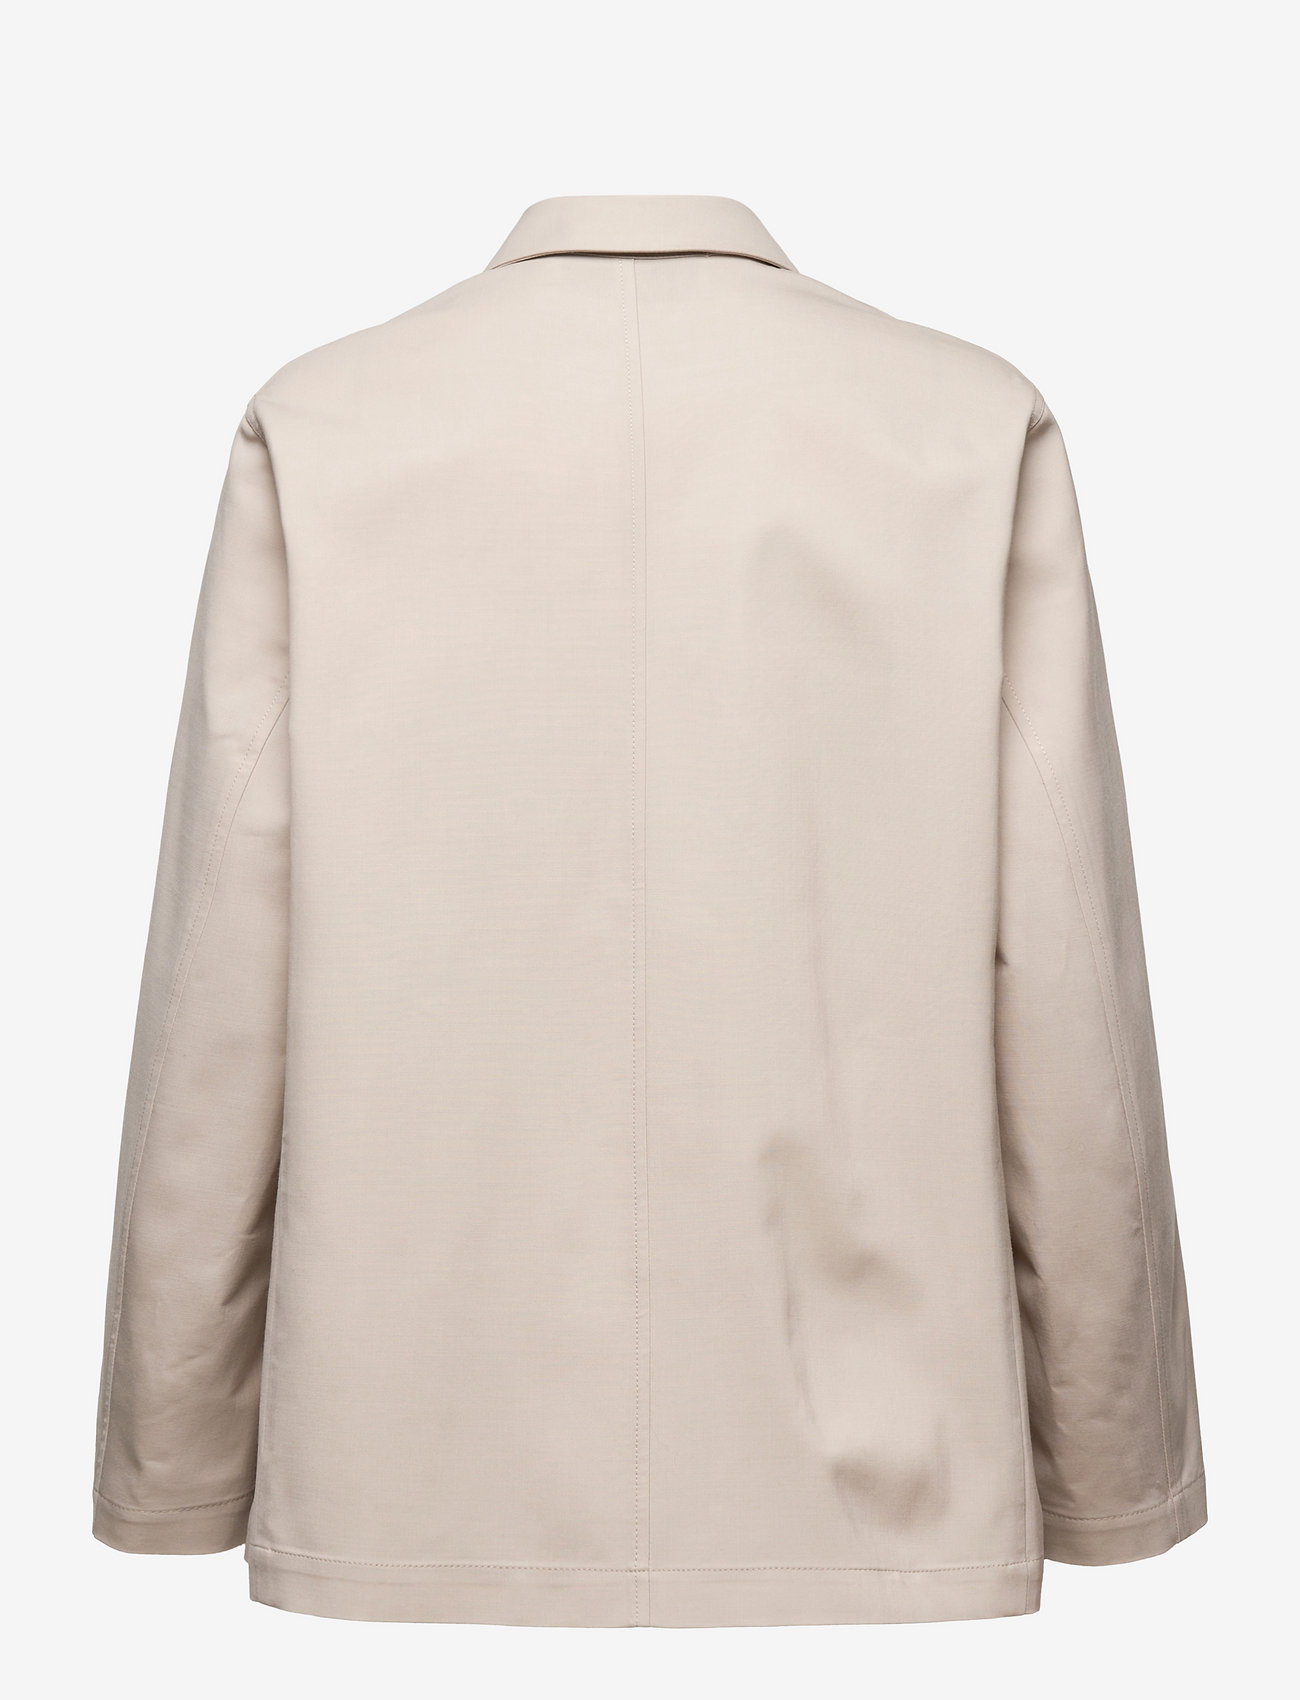 Closed - field jacket - vestes utilitaires - grain beige - 2